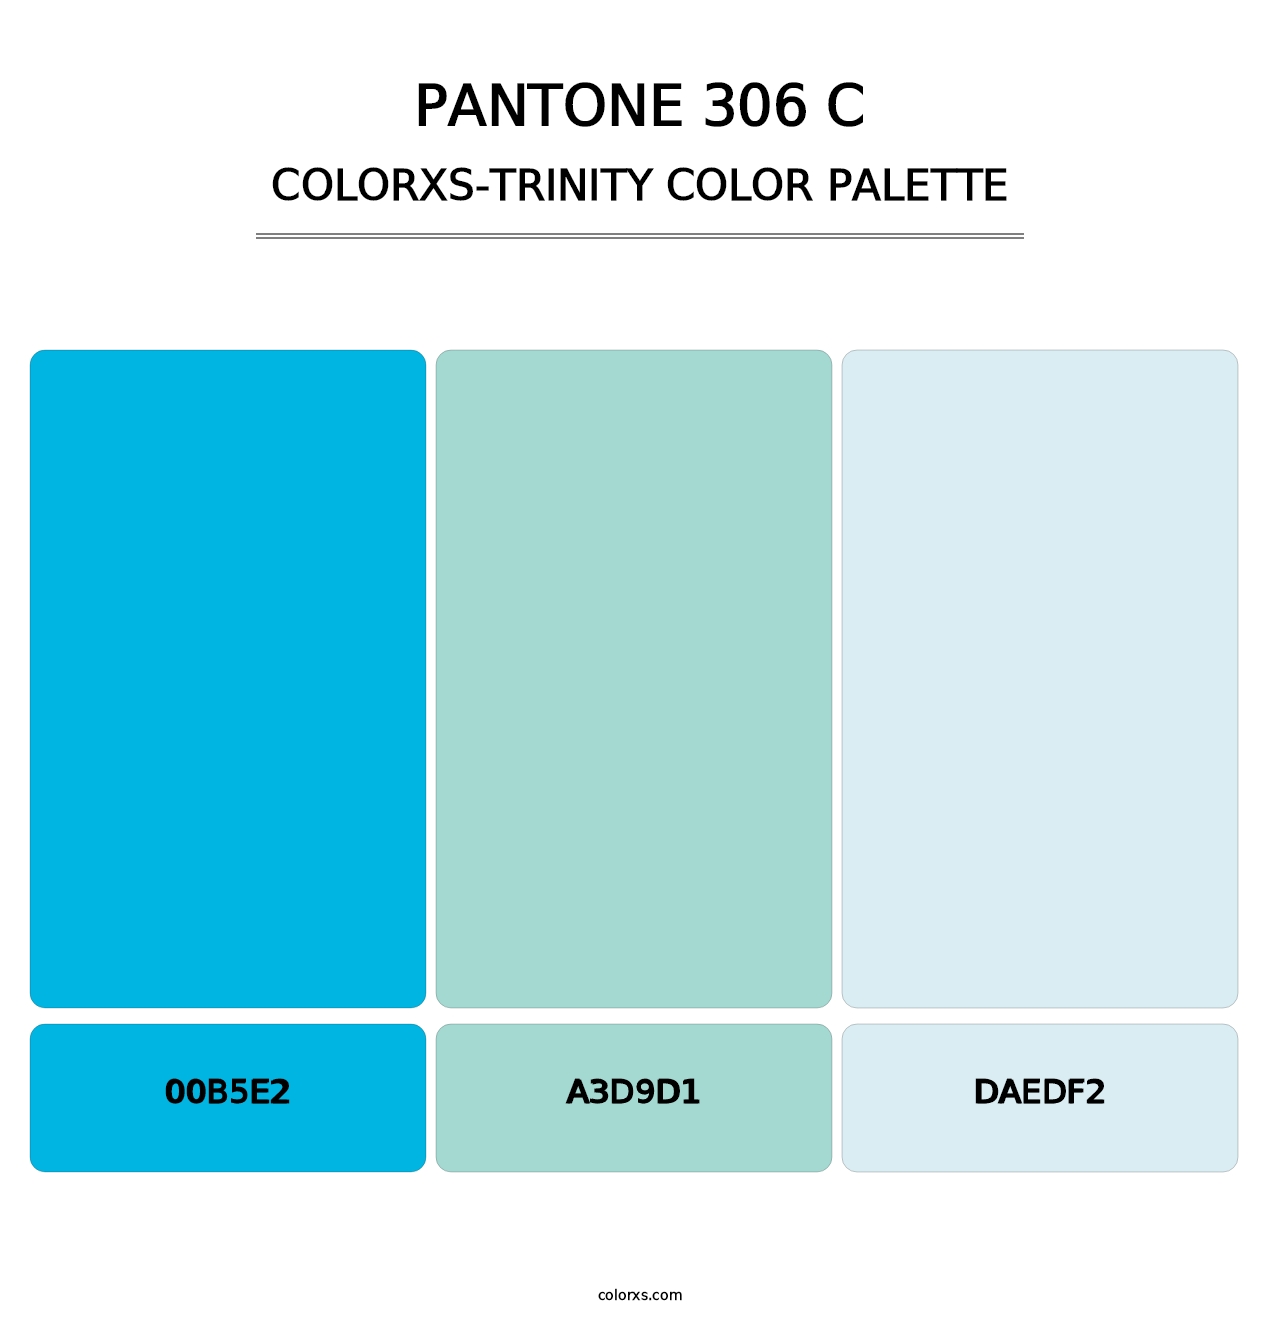 PANTONE 306 C - Colorxs Trinity Palette